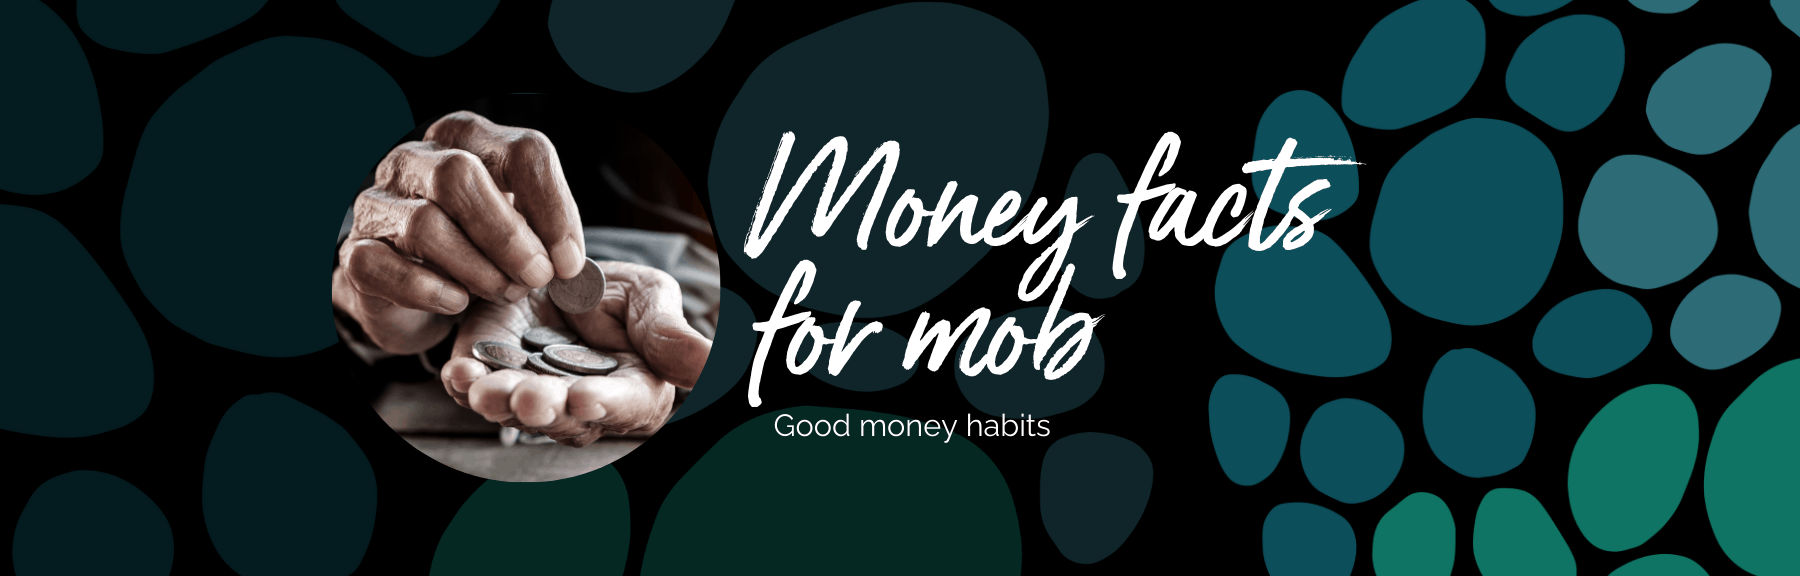 finance facts banner good money habits